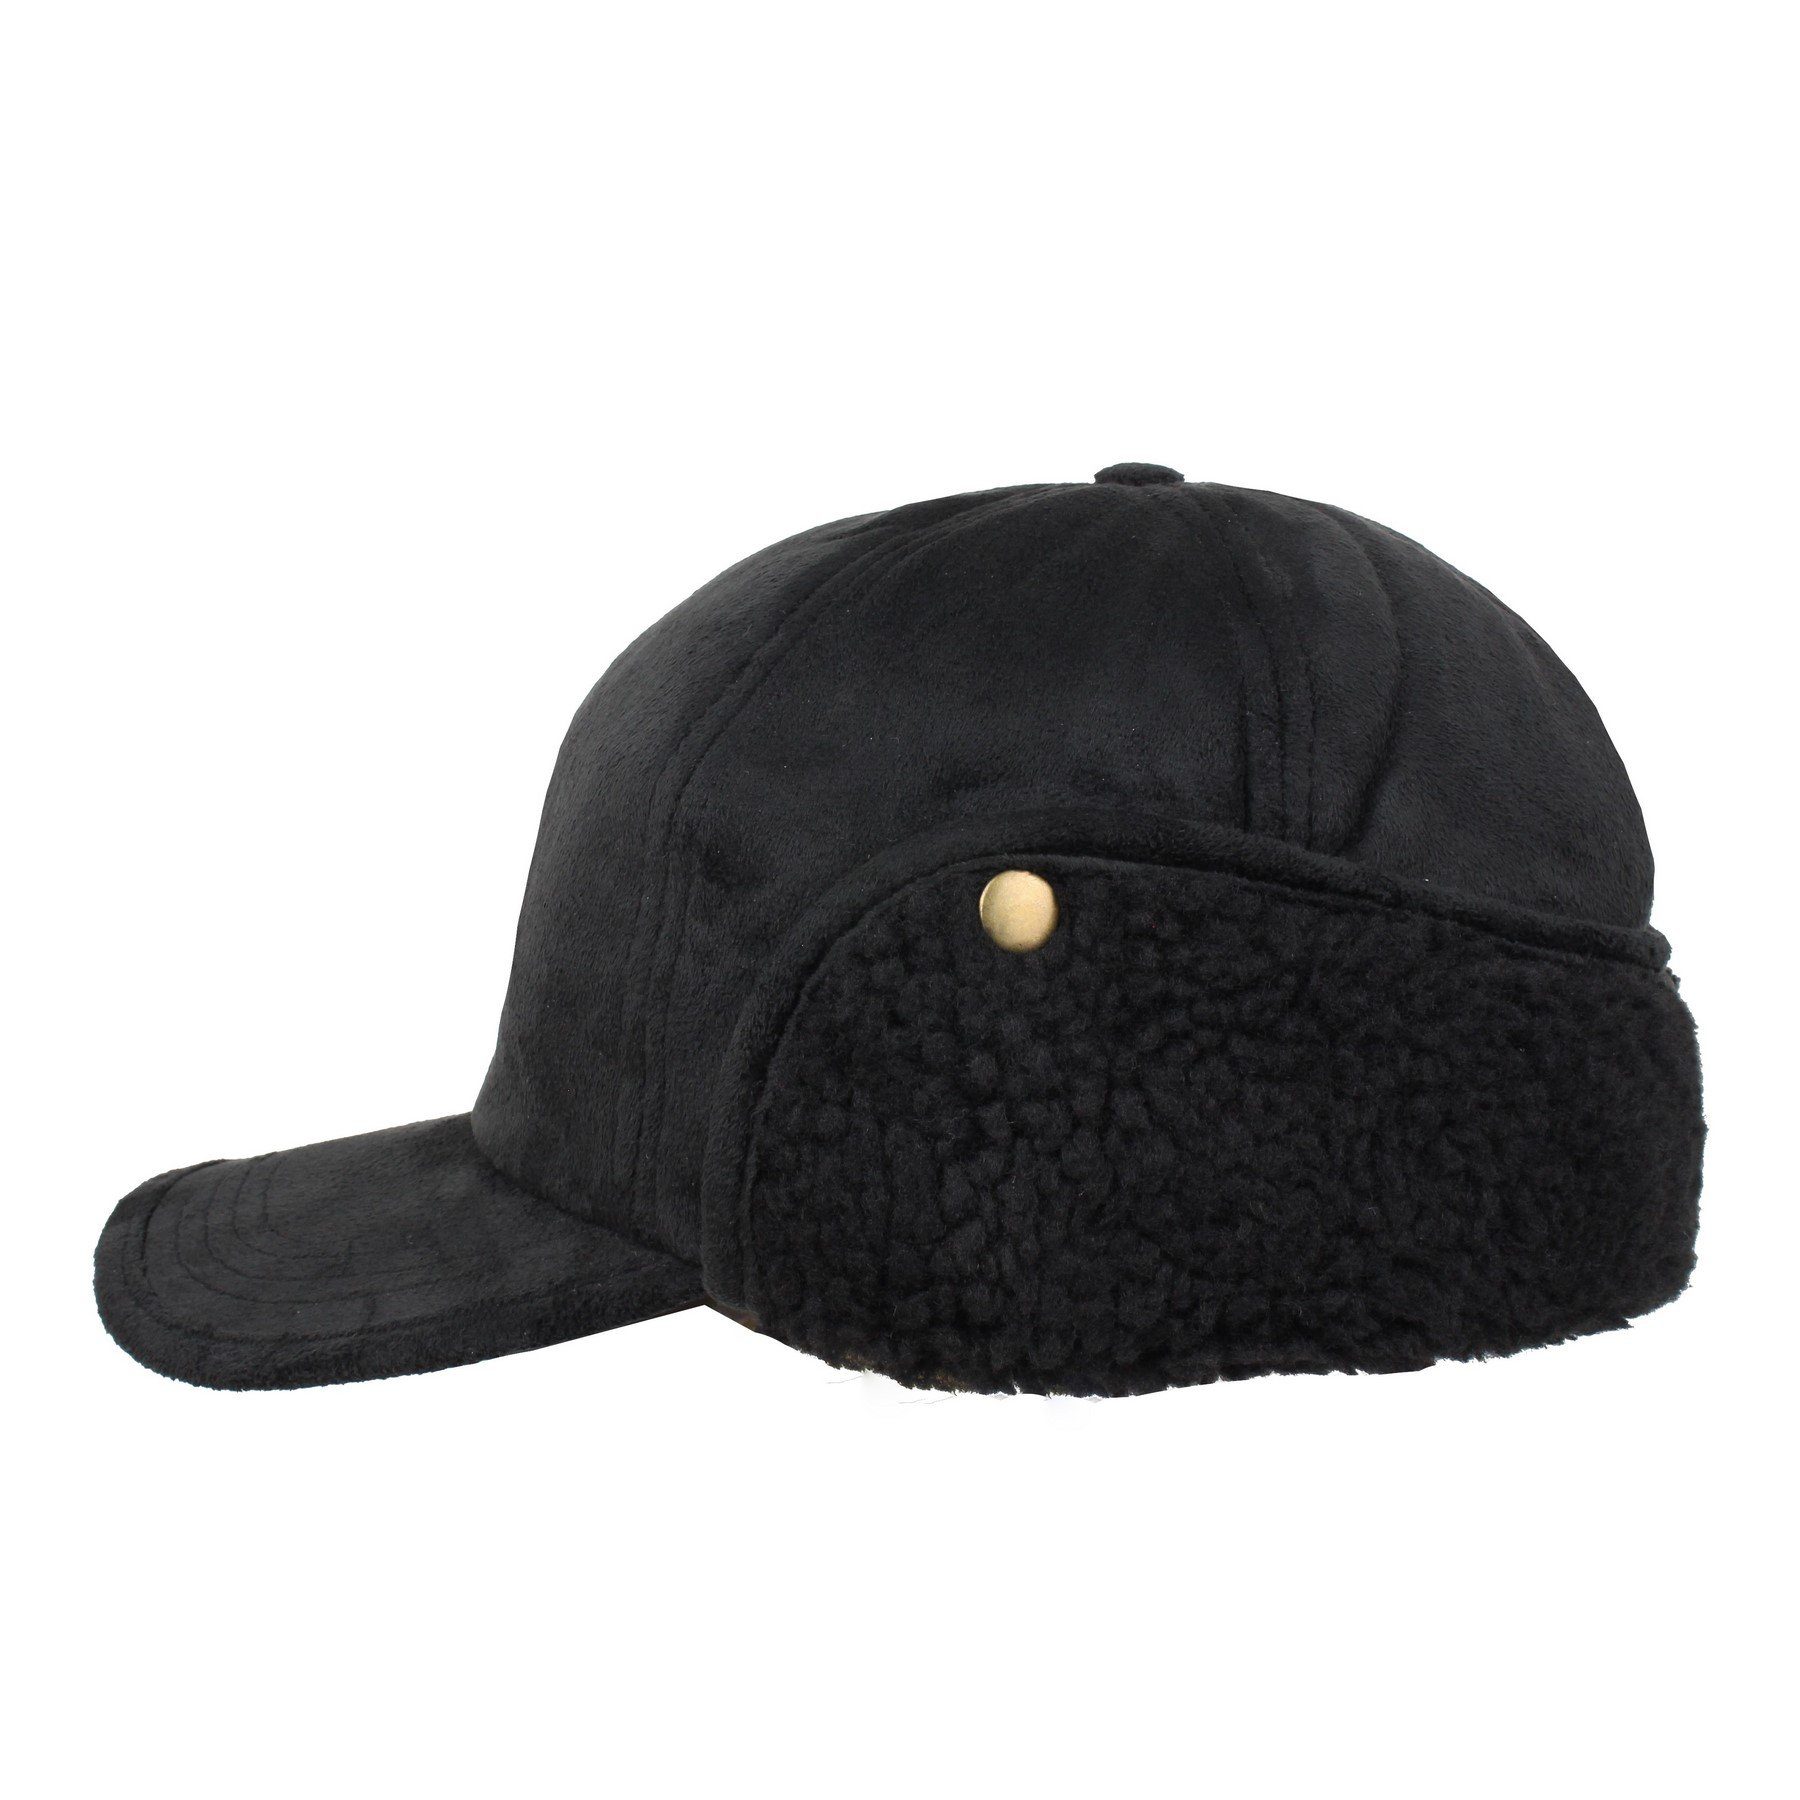 HatBee Baseball Cap Hatbee Winterbasecap mit Ohrenklappen Schwarz